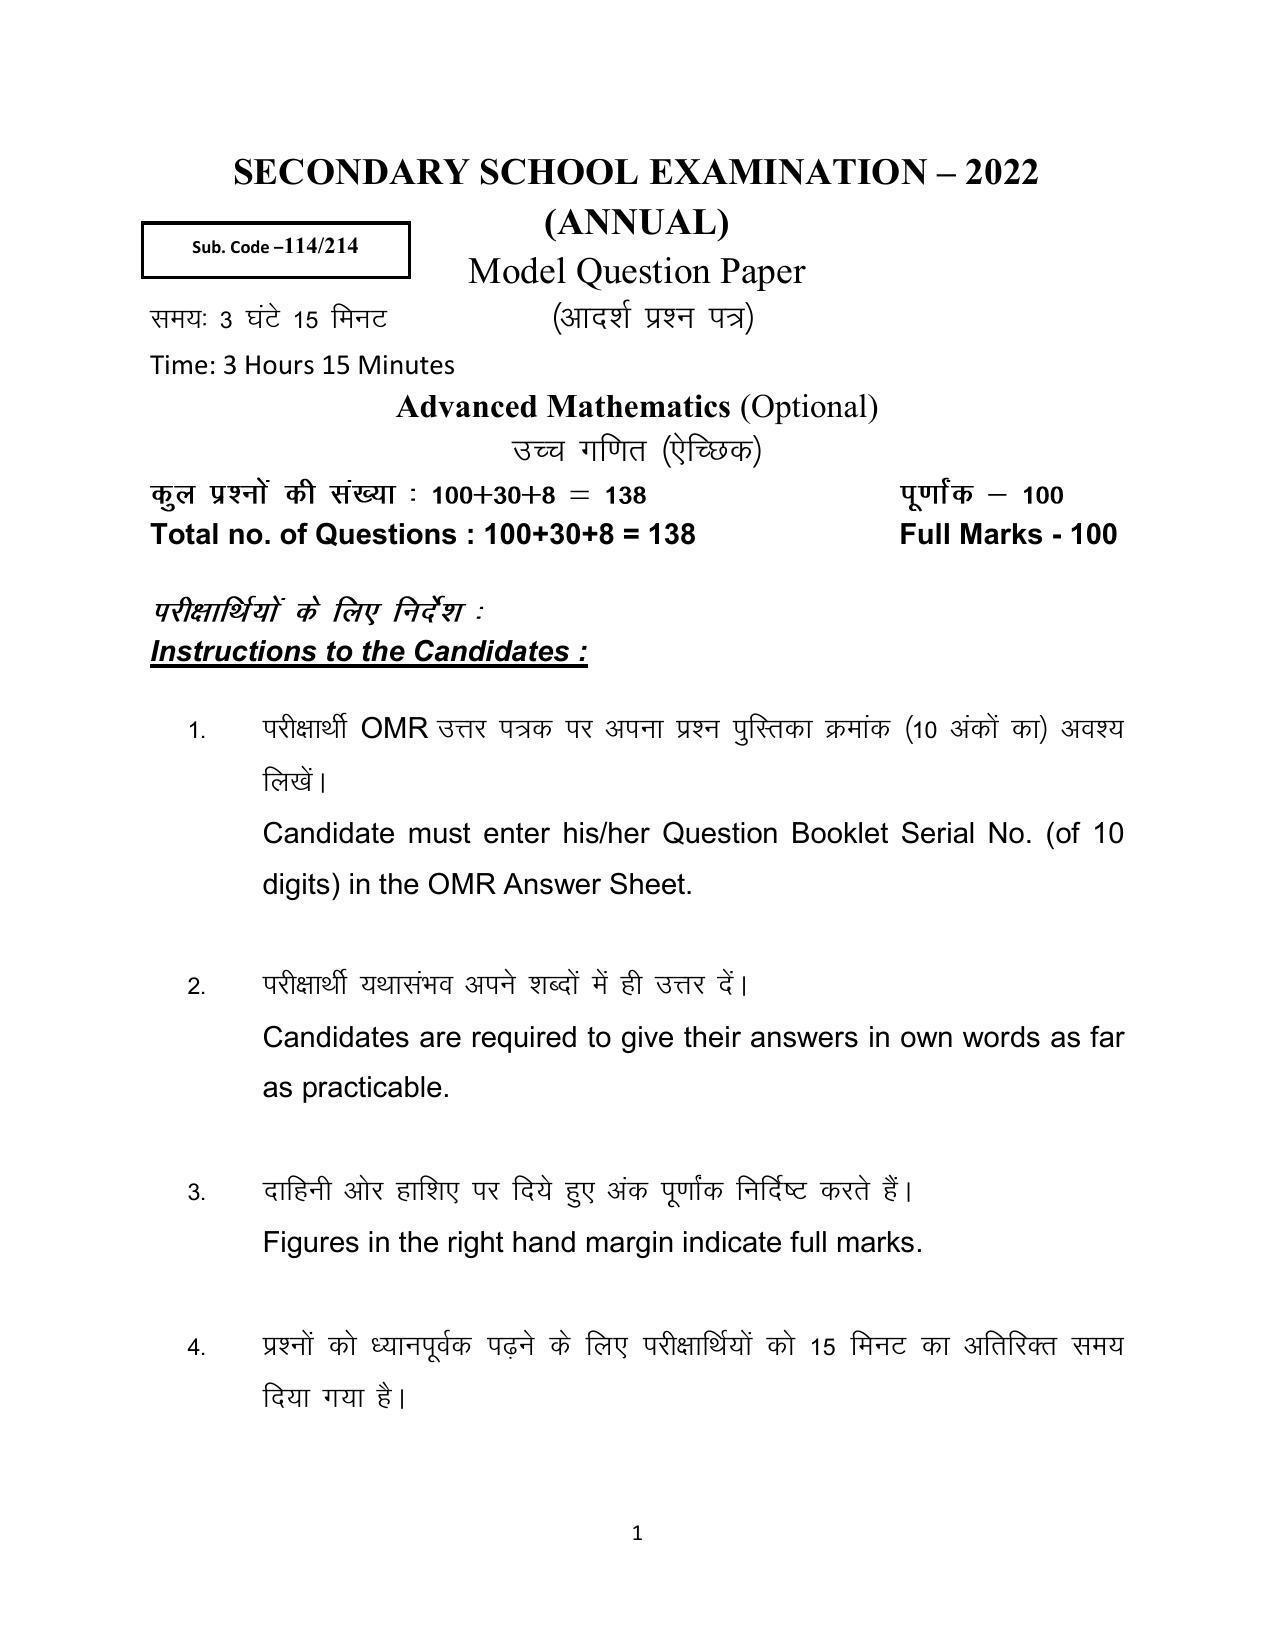 Bihar Board 10th Model Paper 2022 -Advanced Mathematics (Optional) - Page 1